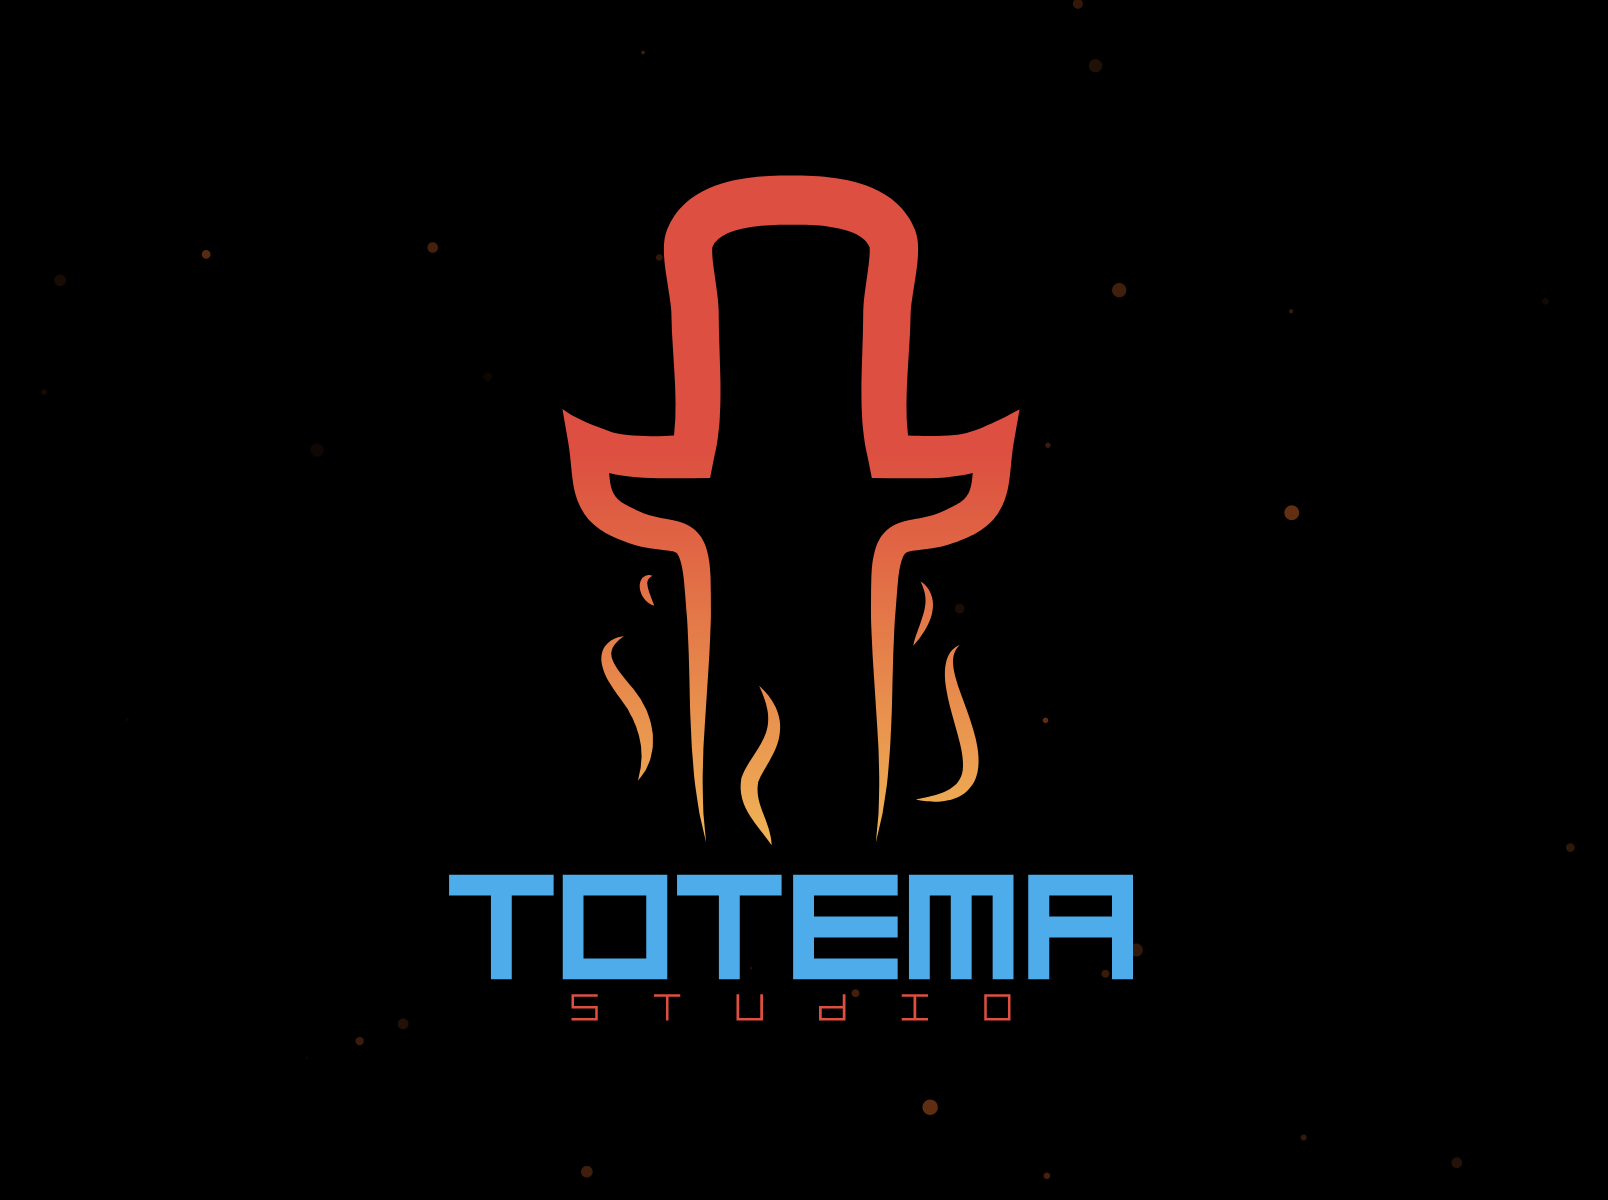 Totema Studio